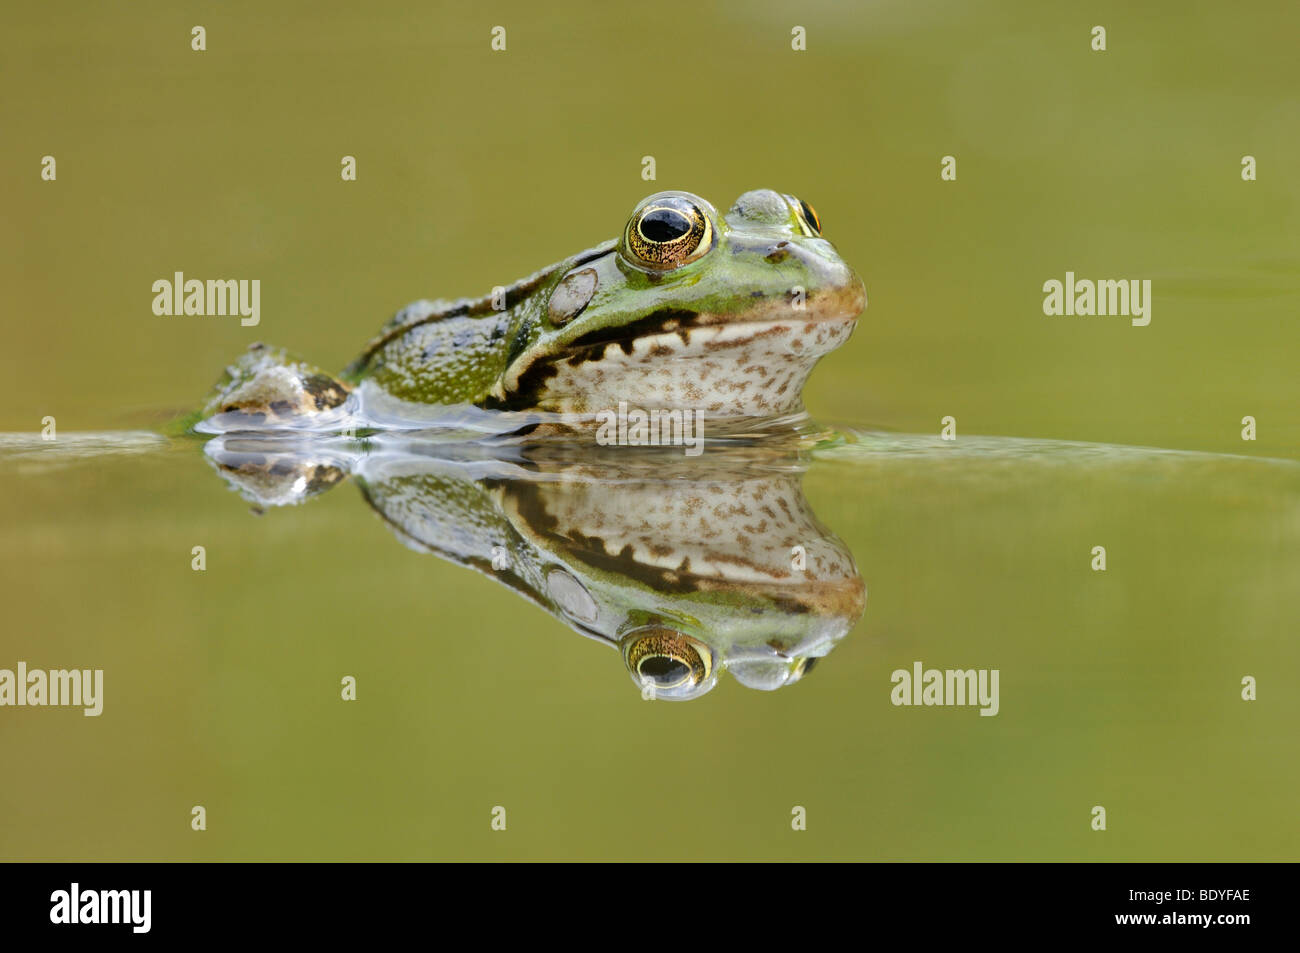 Water frog (Rana esculenta, Pelophylax kl. esculentus) with reflection Stock Photo